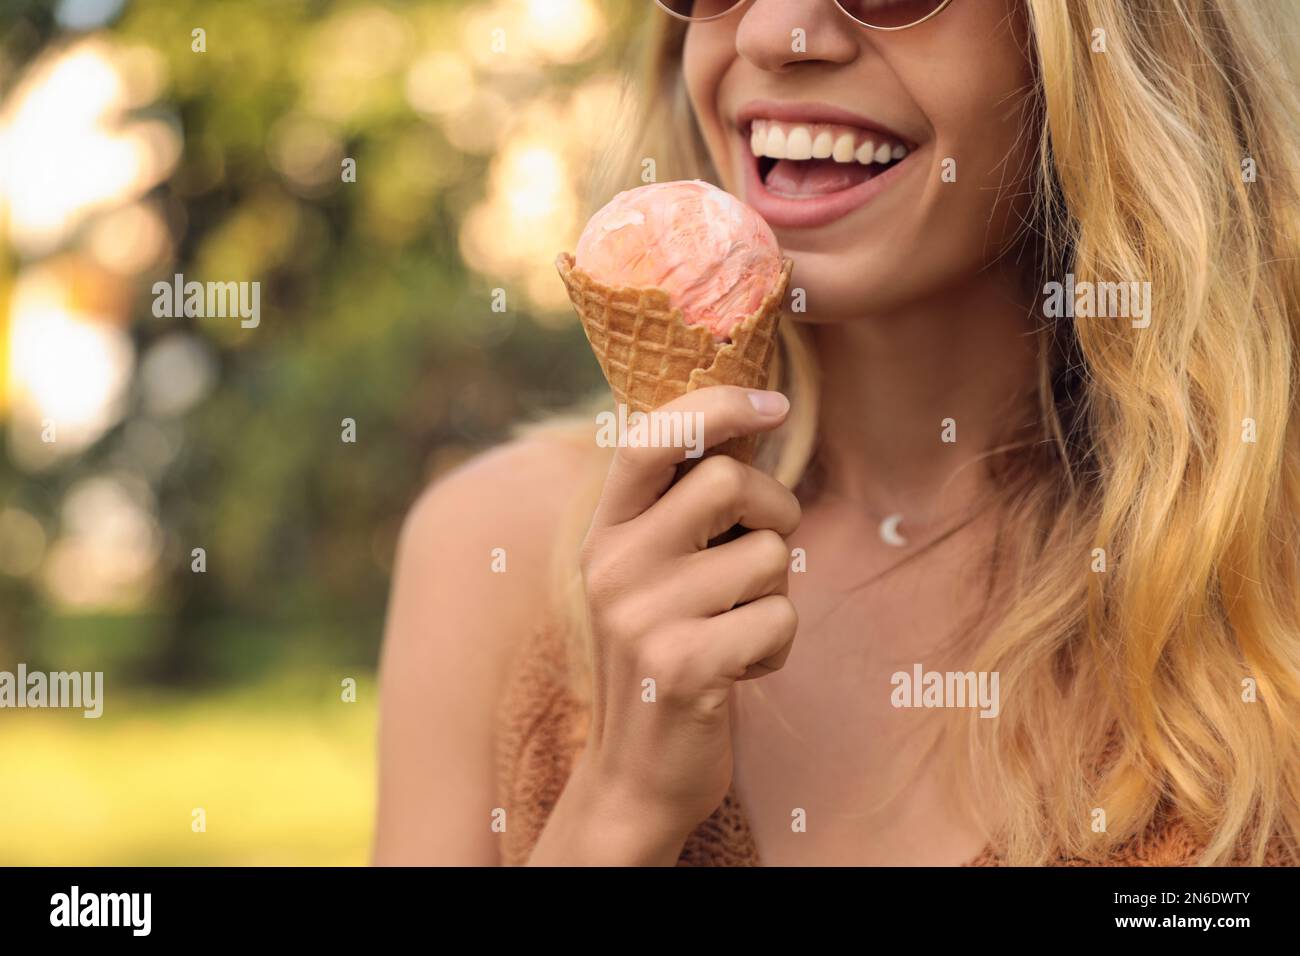 Вкусно ест мороженое. Ест мороженое. Человек ест мороженое. Поедание мороженого. Девушка ест мороженое.